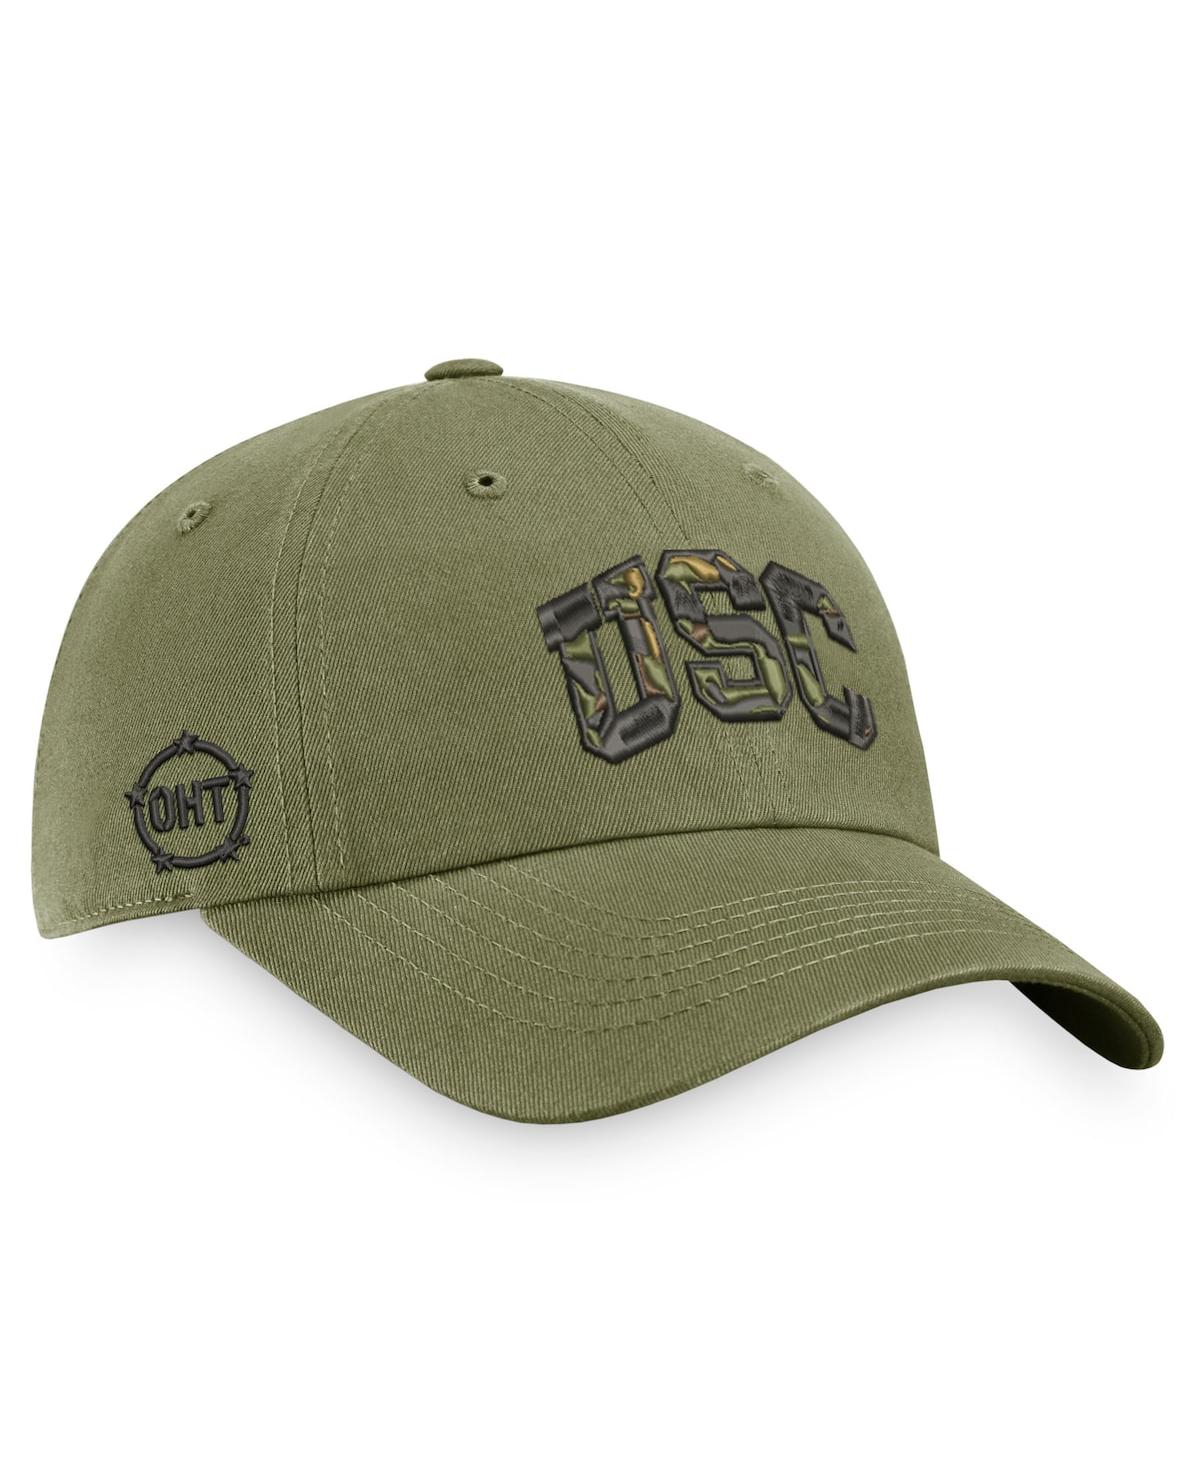 Shop Top Of The World Men's  Olive Usc Trojans Oht Military-inspired Appreciation Unit Adjustable Hat